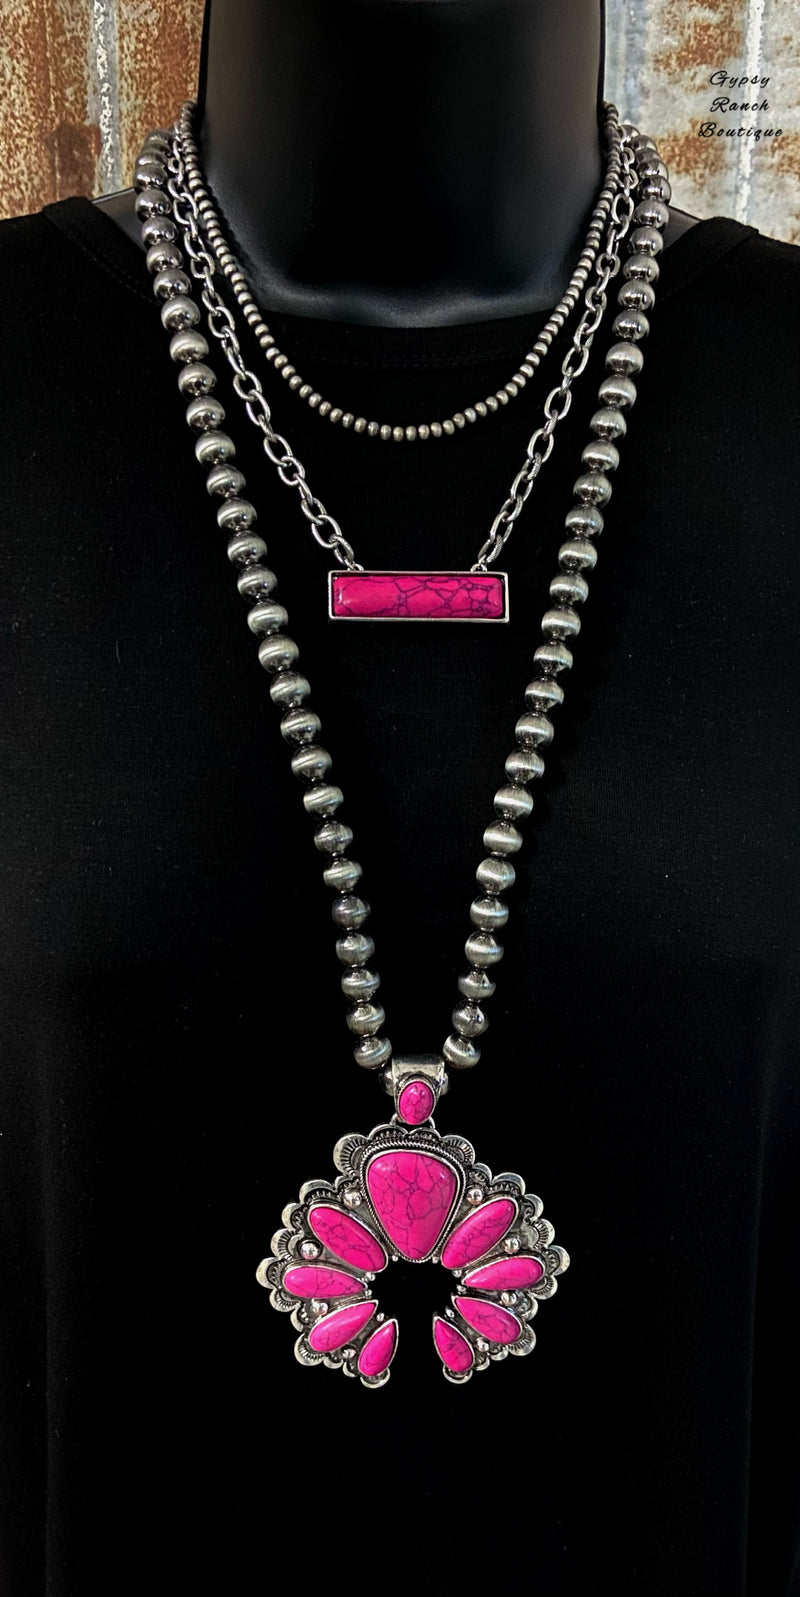 Prestige Pink Squash Necklace